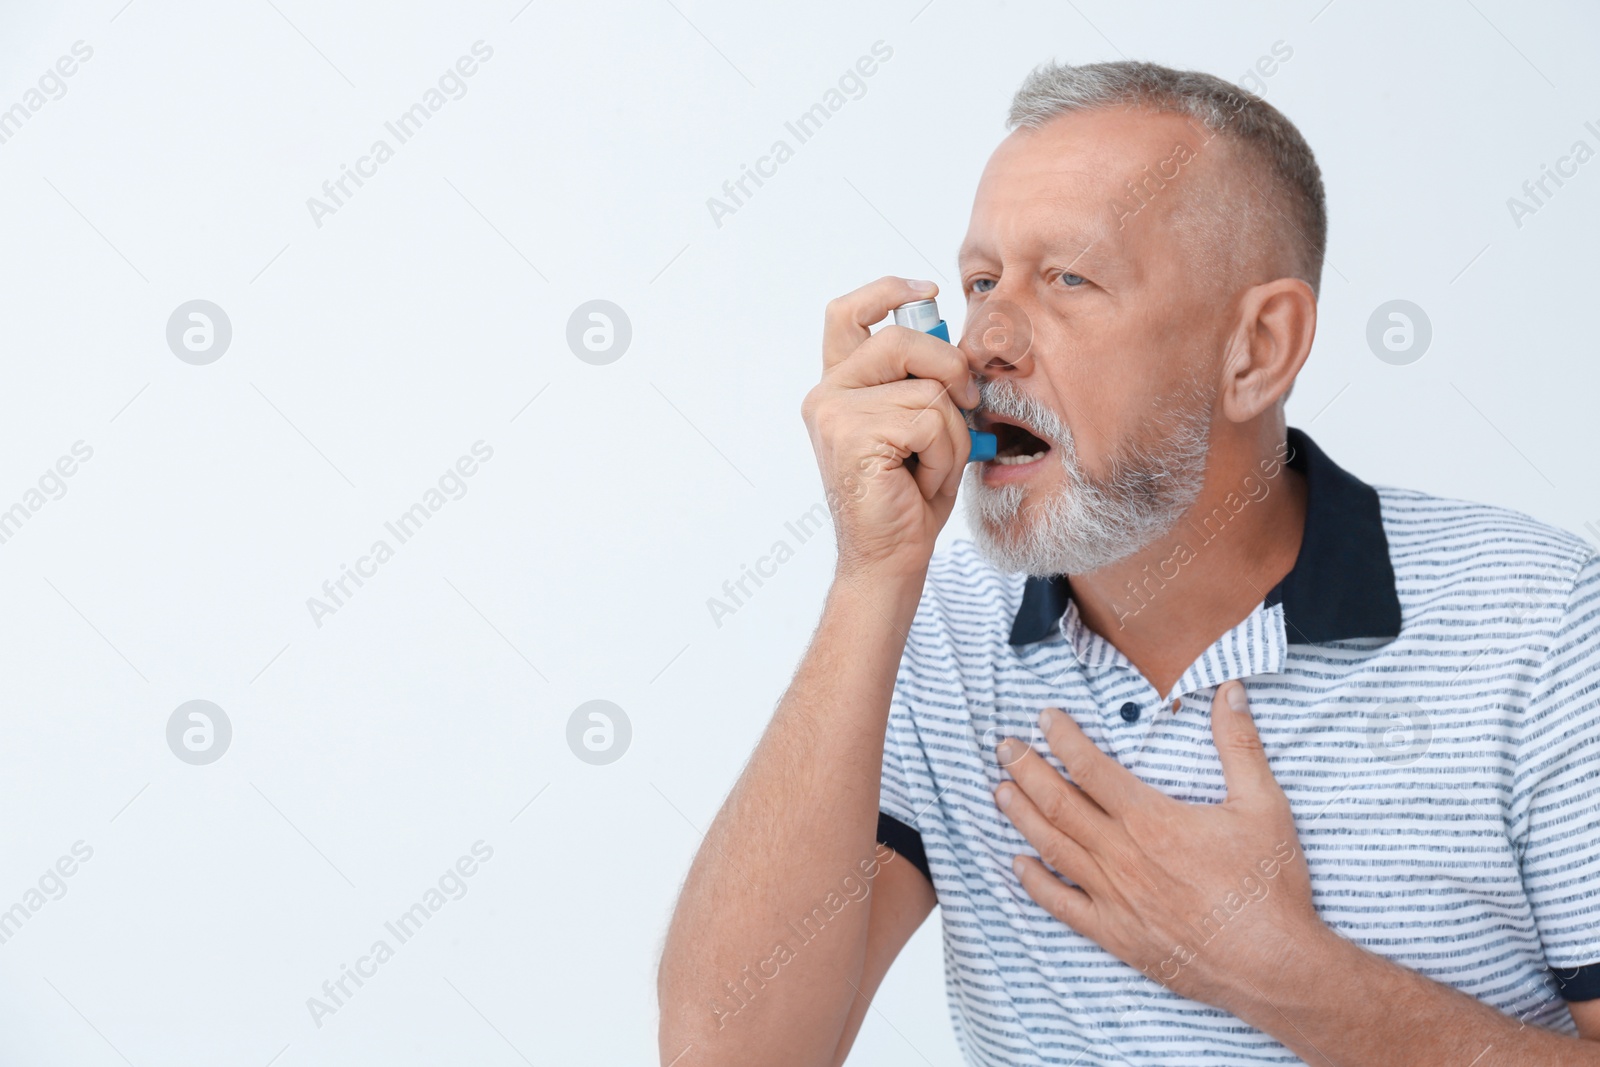 Photo of Man using asthma inhaler on white background